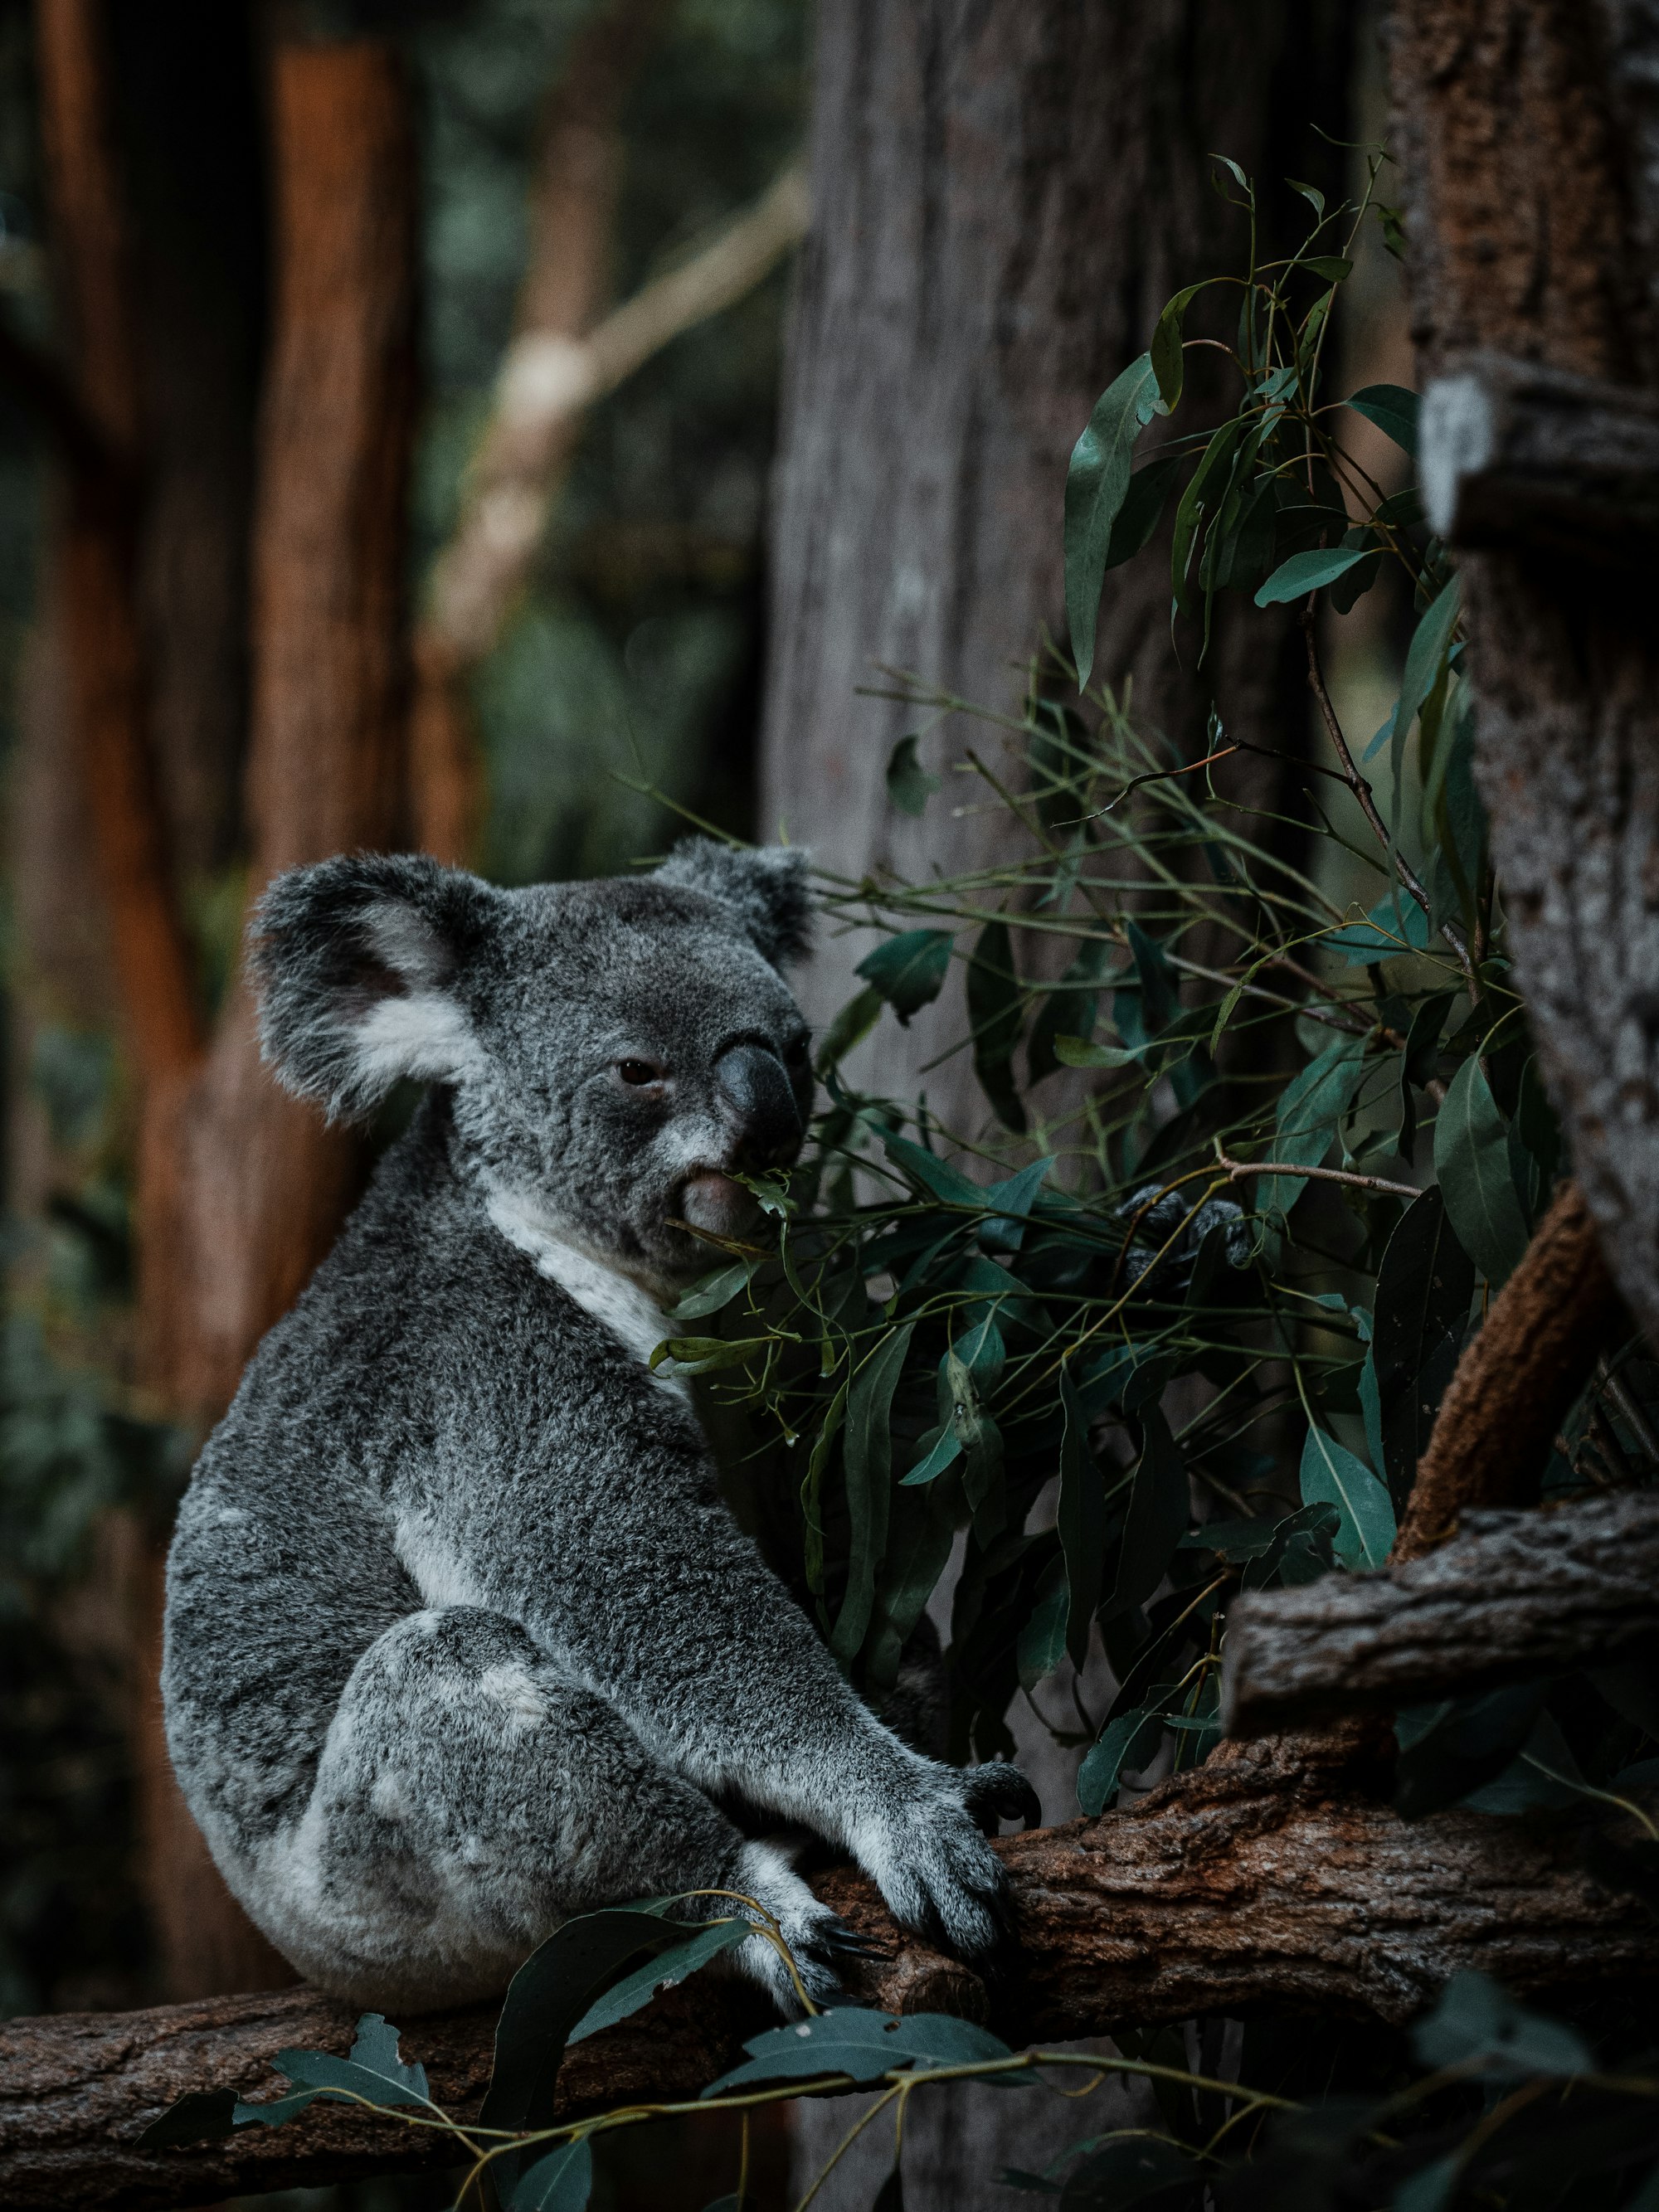 Female koala eating leaves at Australia Zoo.